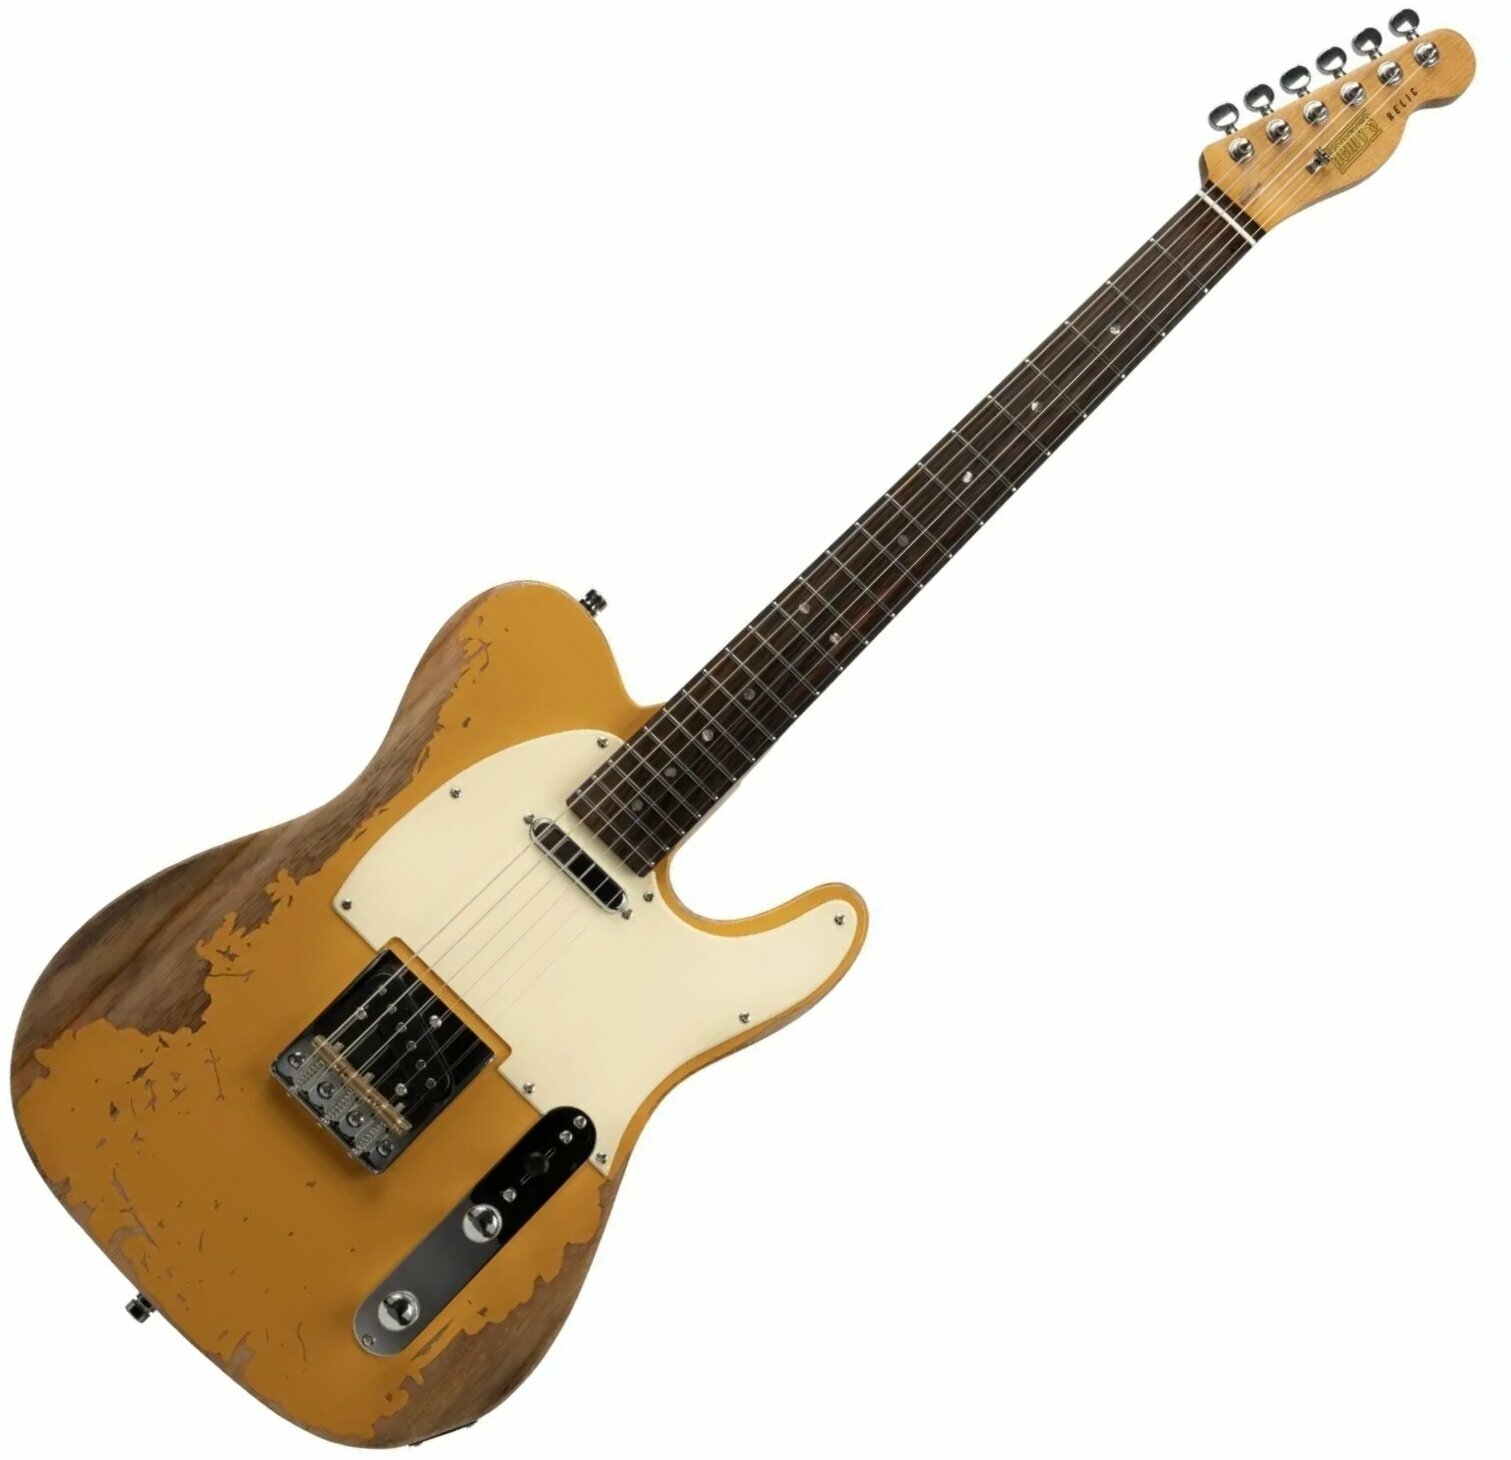 Guitarra electrica Henry's TL-1 The Comet Yellow Relic Guitarra electrica